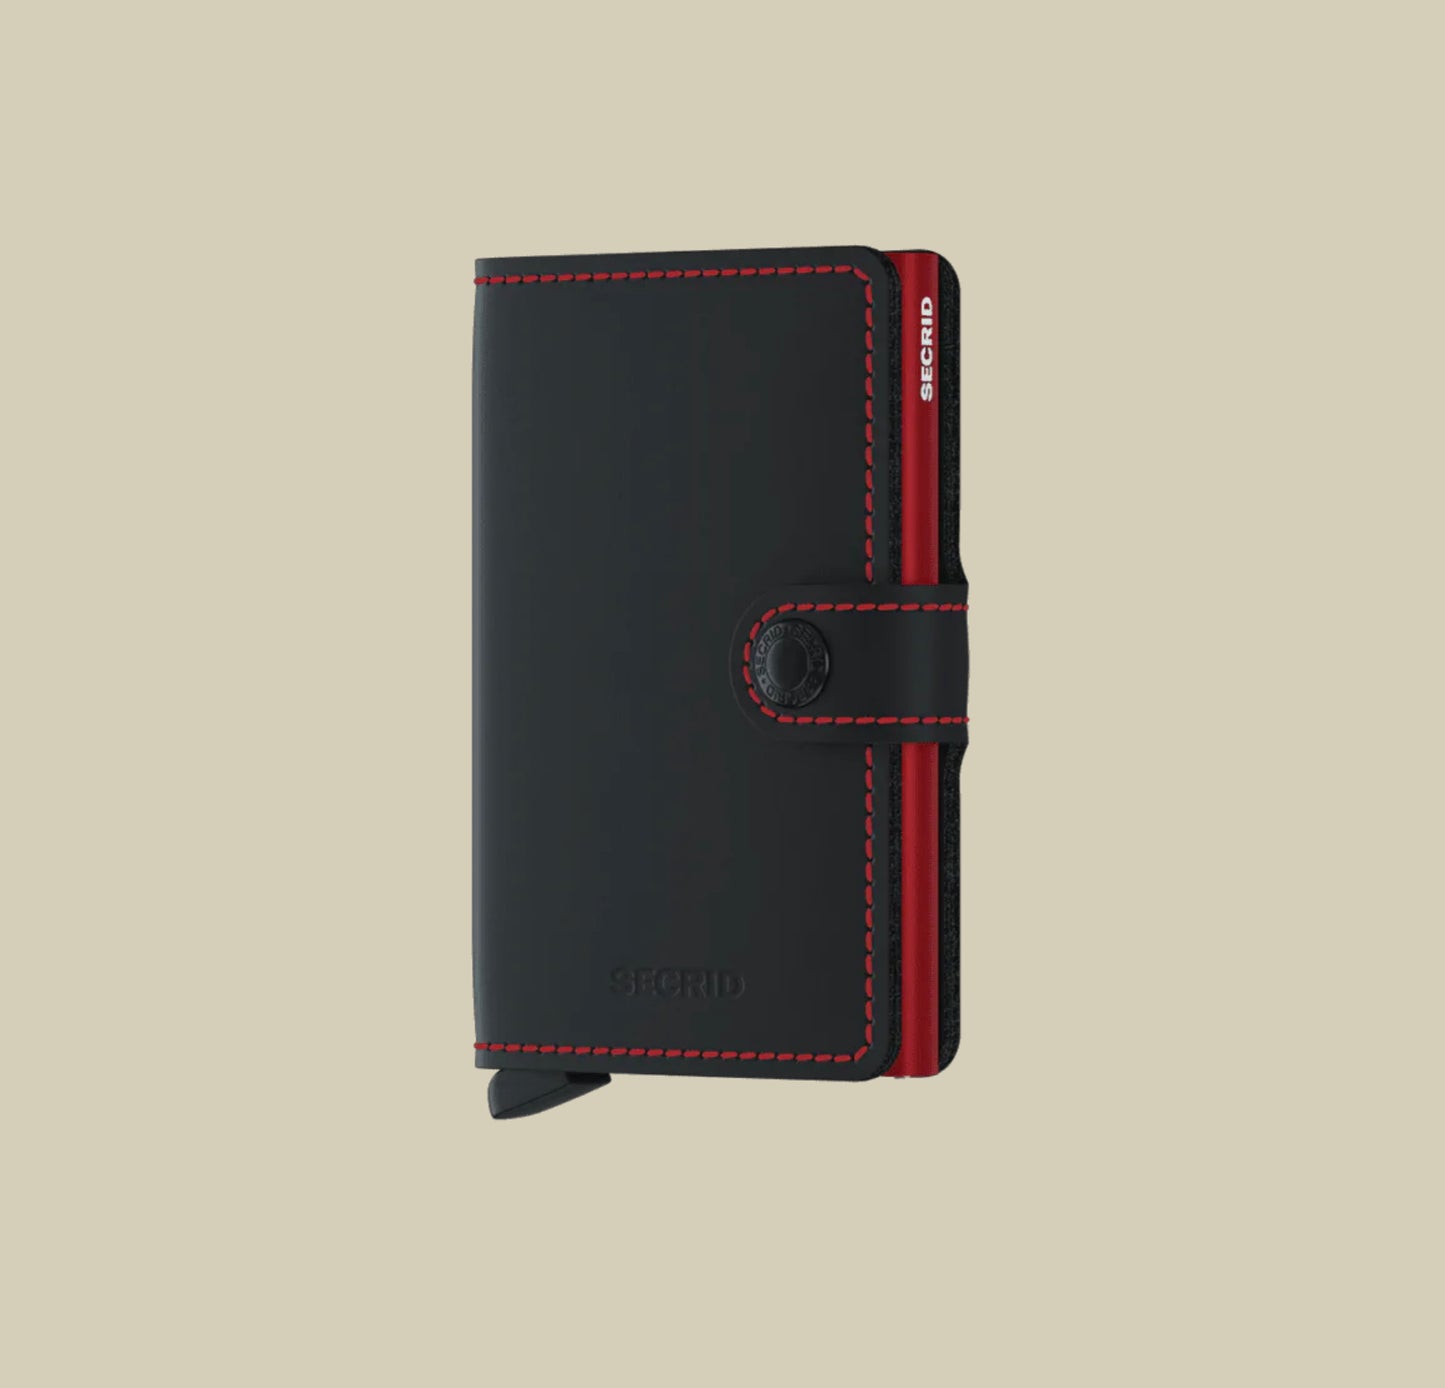 Secrid Mini wallet black red urban Depot leederville 